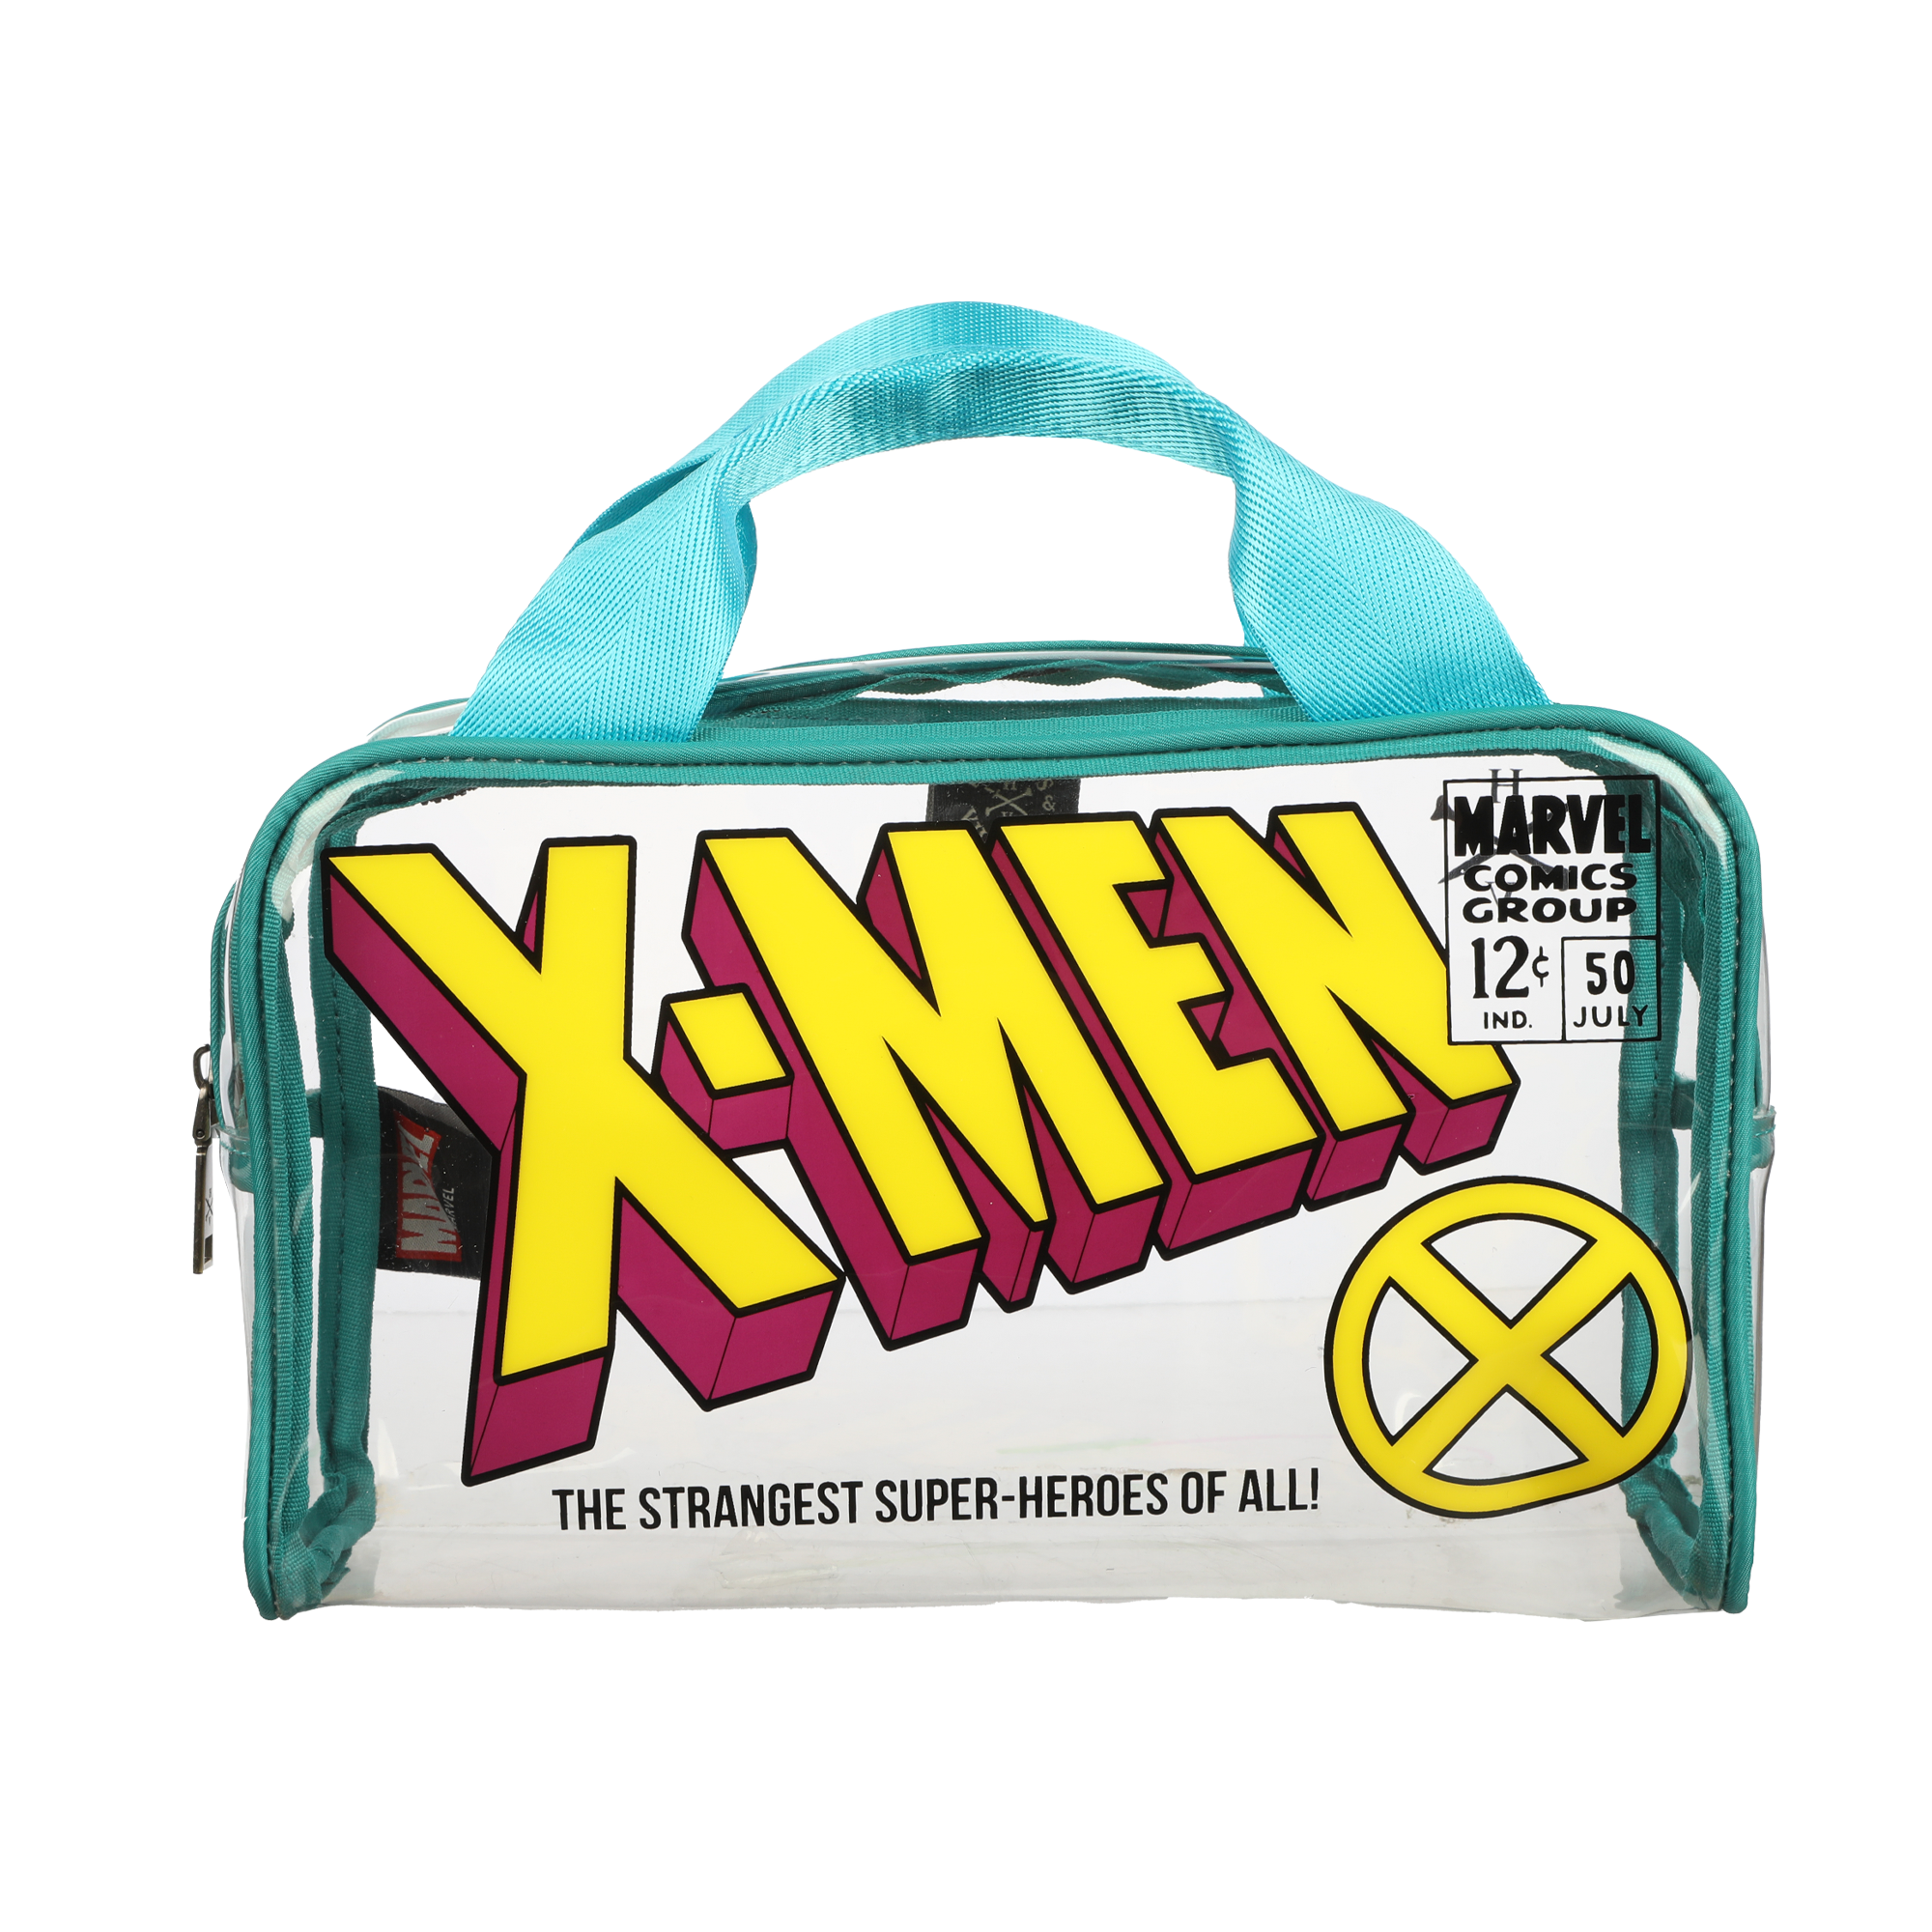 X-Men Cosmetic Travel Set